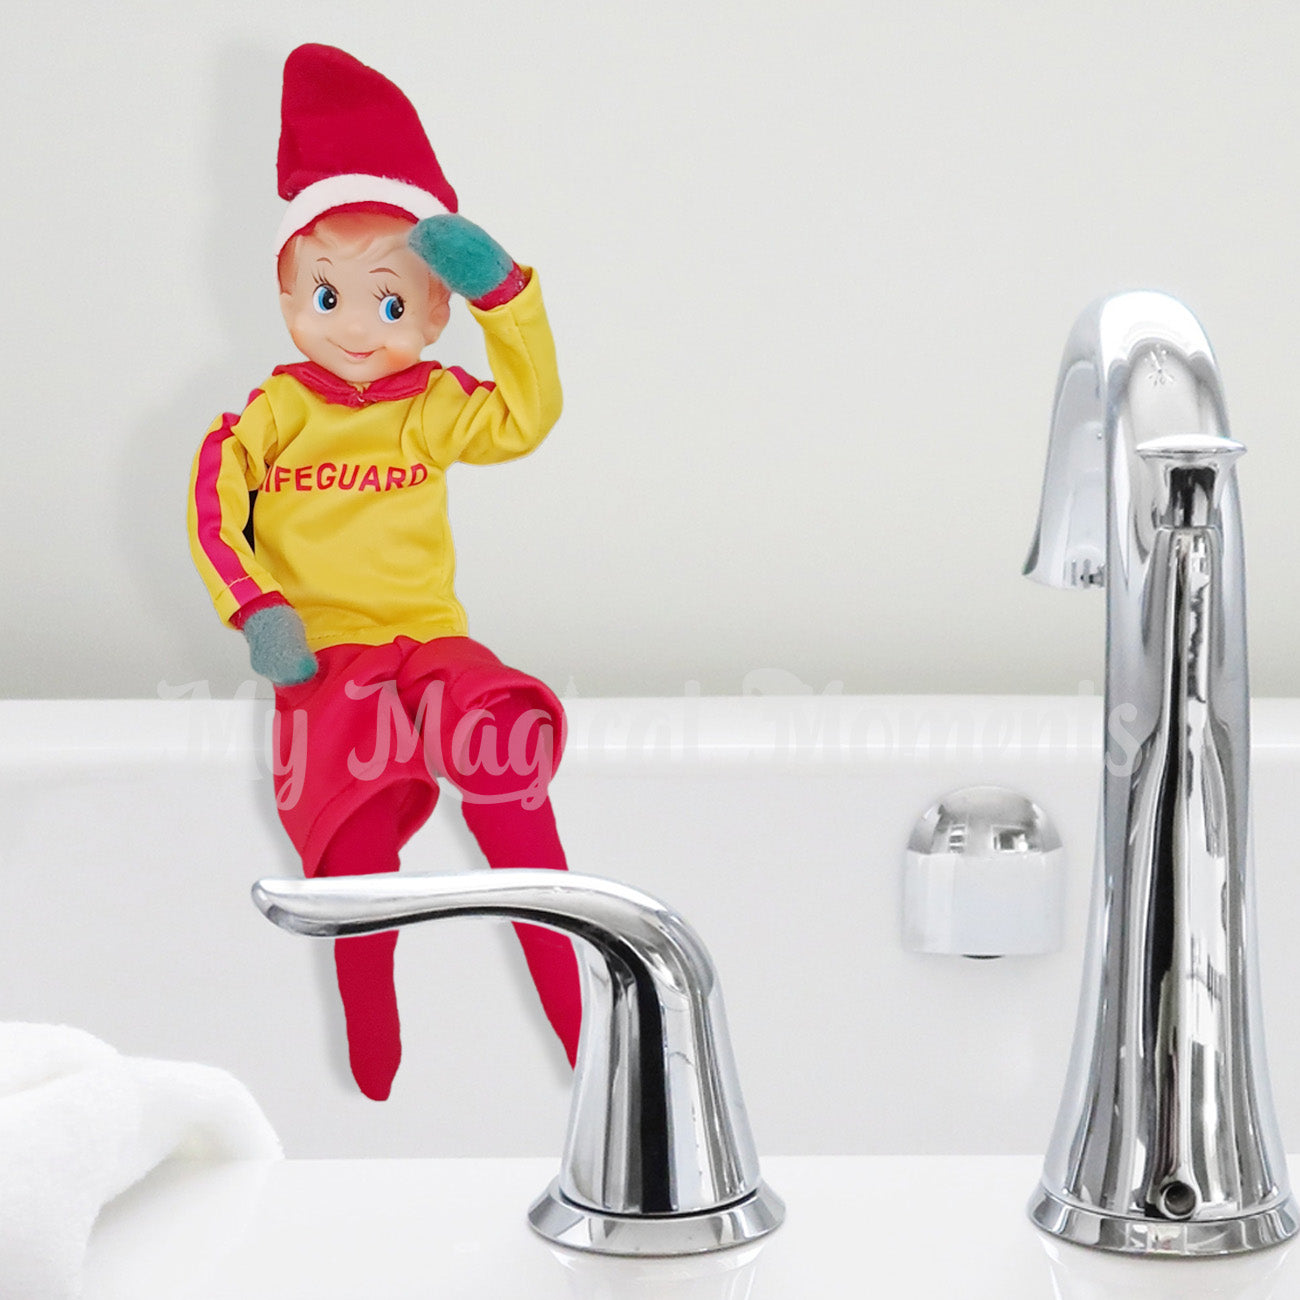 elf watching in the bathroom wearing an elf lifeguard costume